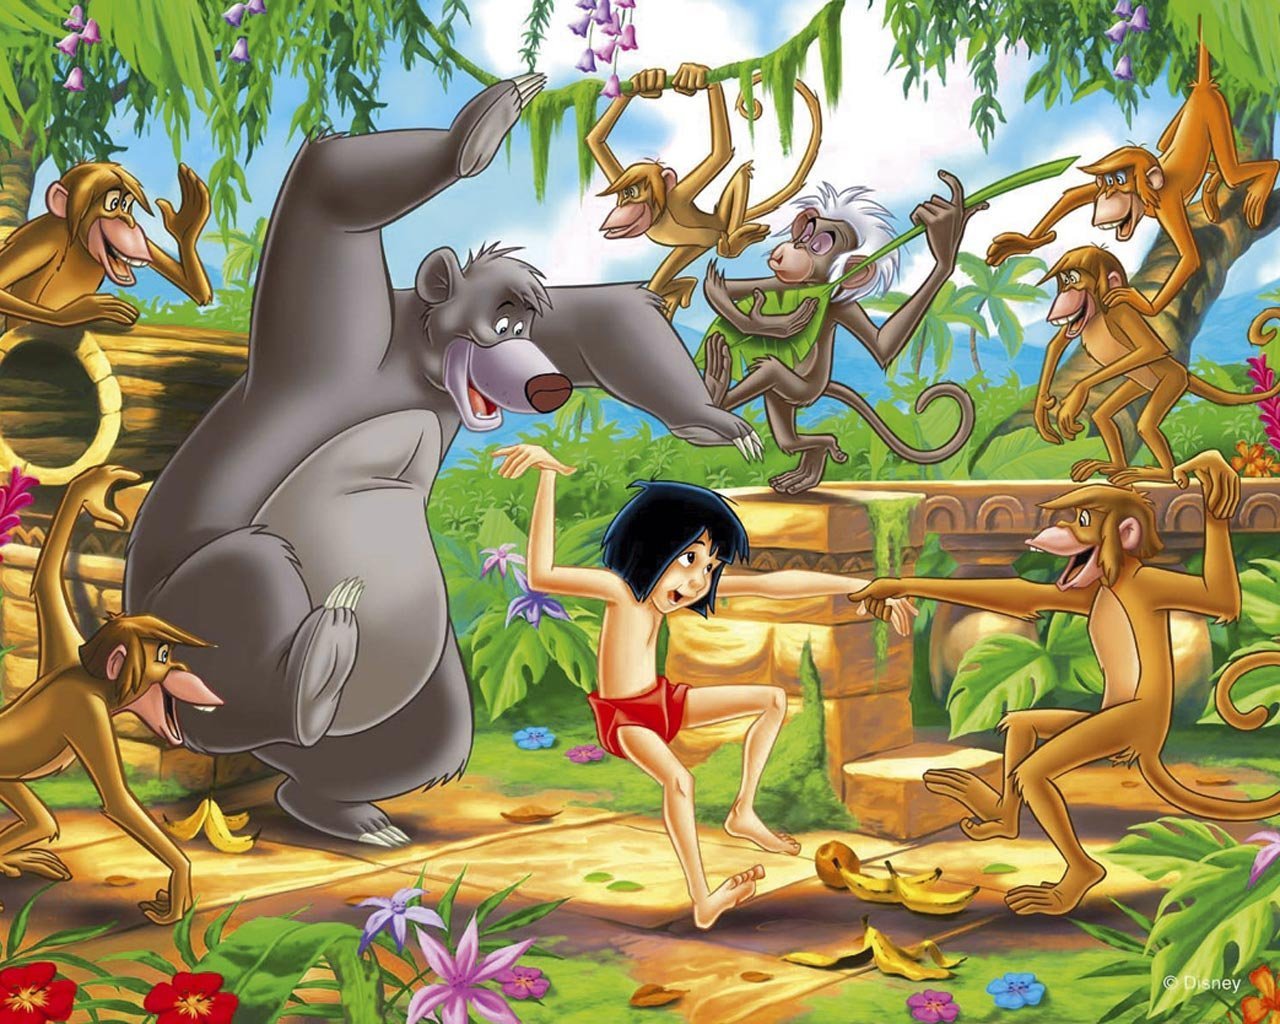 Disney Image The Jungle Book Wallpaper Photos